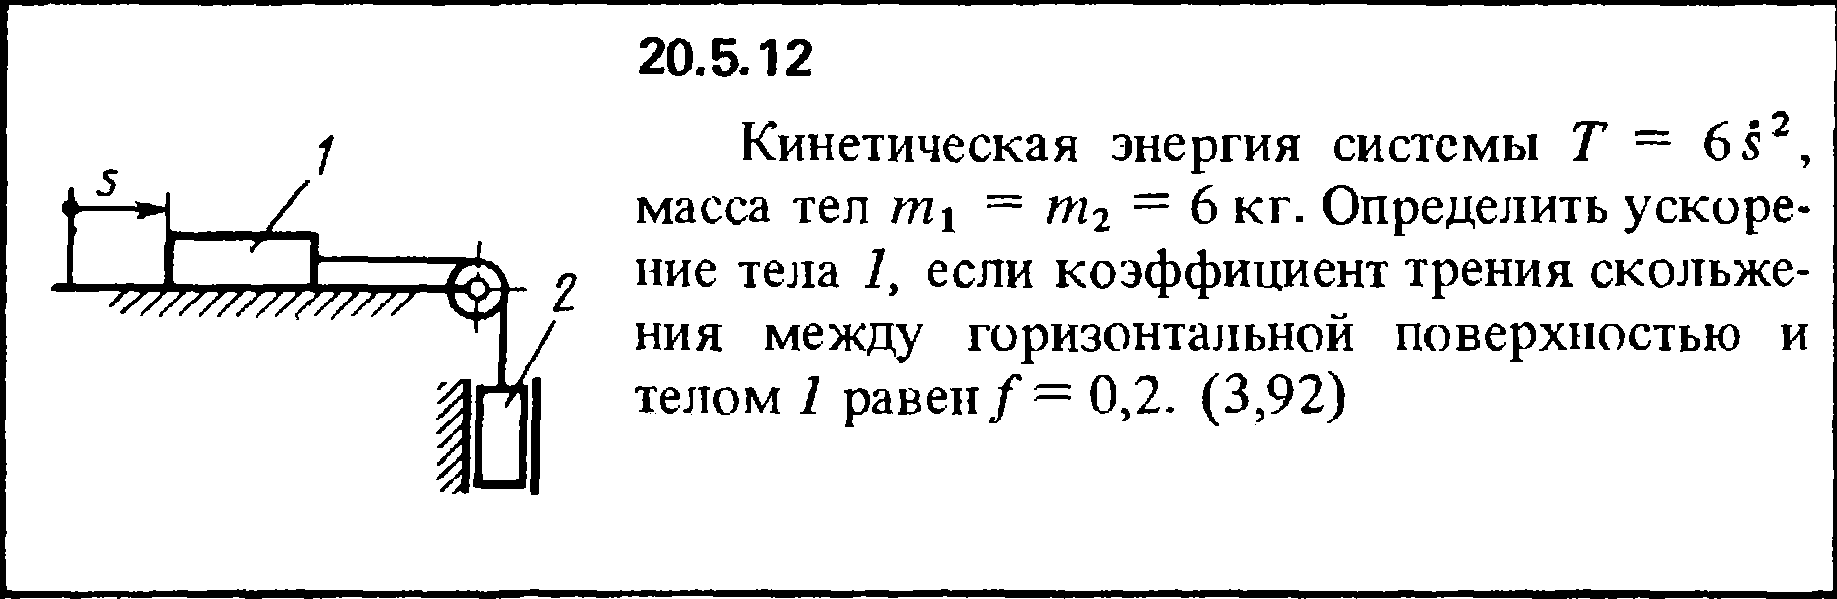 Решение 20.5.12 из сборника (решебника) Кепе О.Е. 1989